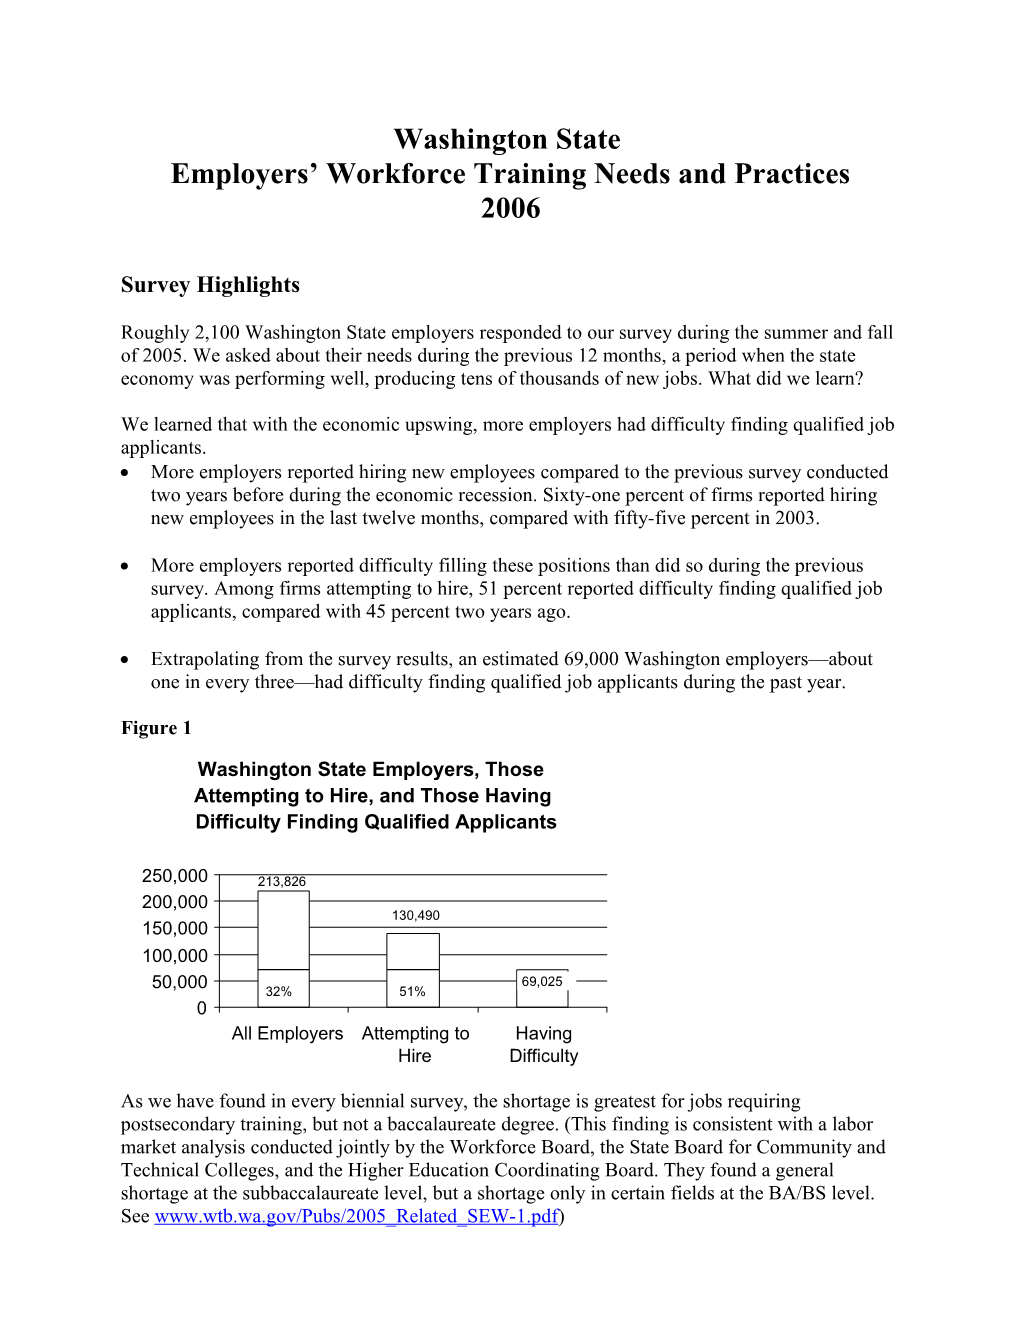 Washington State Employers Workforce Training Needs and Practices